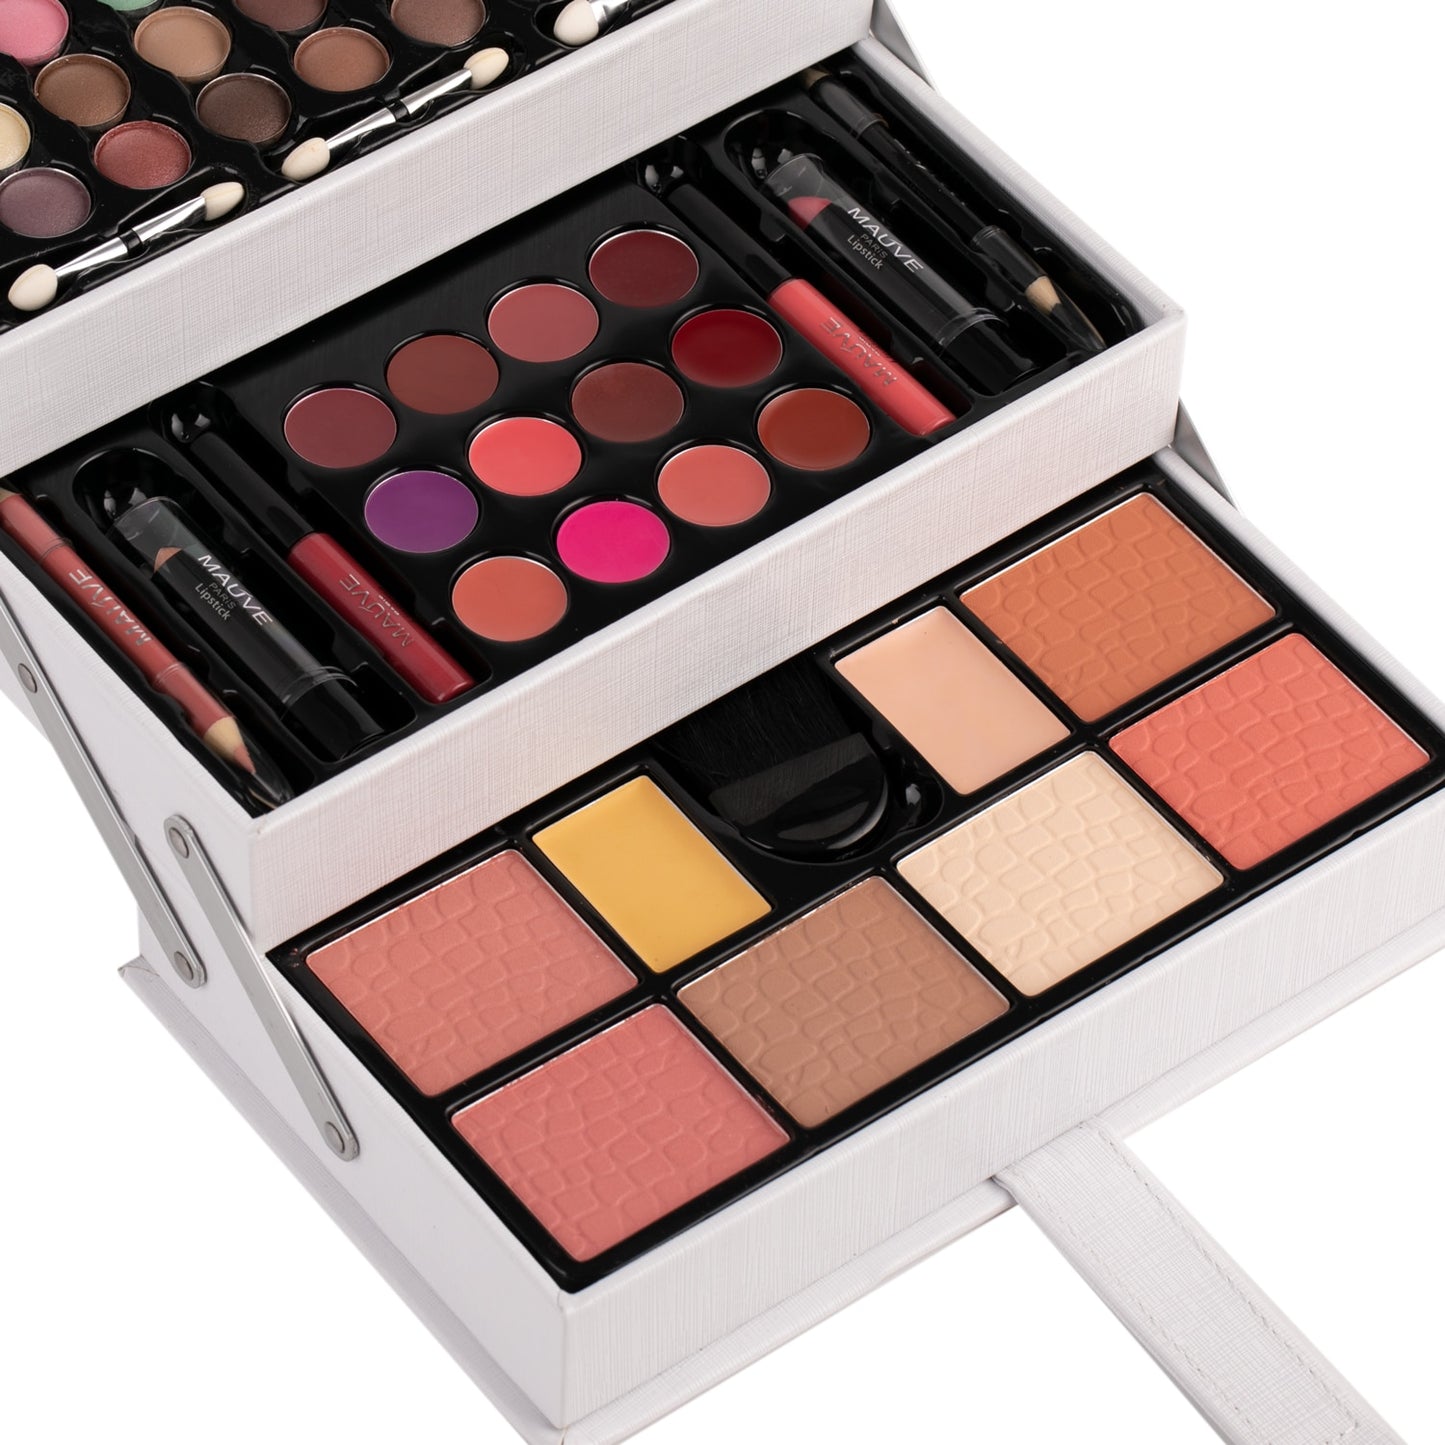 DUER LIKA Professional 45 Color Eyeshadow Blush Cosmetic Foundation Face Powder Makeup Sets Eye Shadows Palette